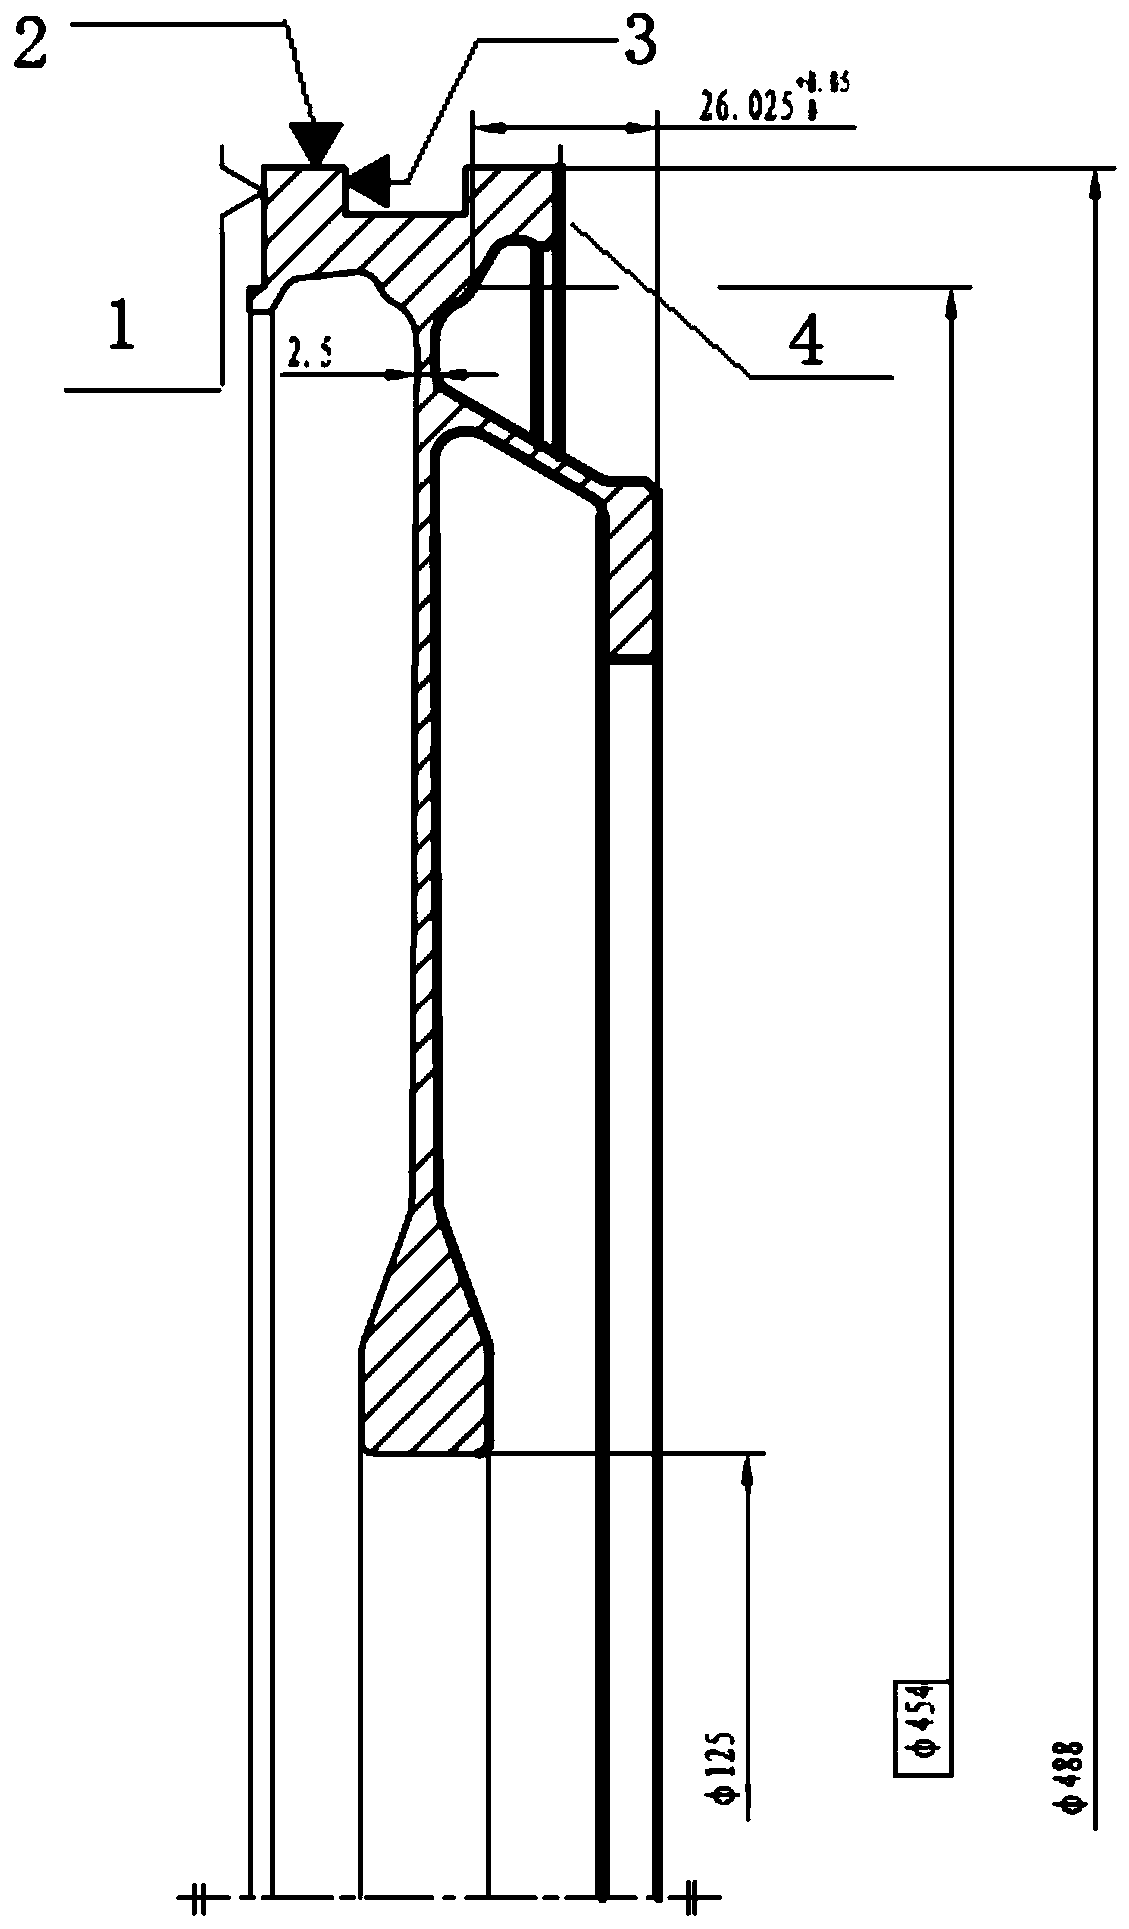 Thin-wall part machining method